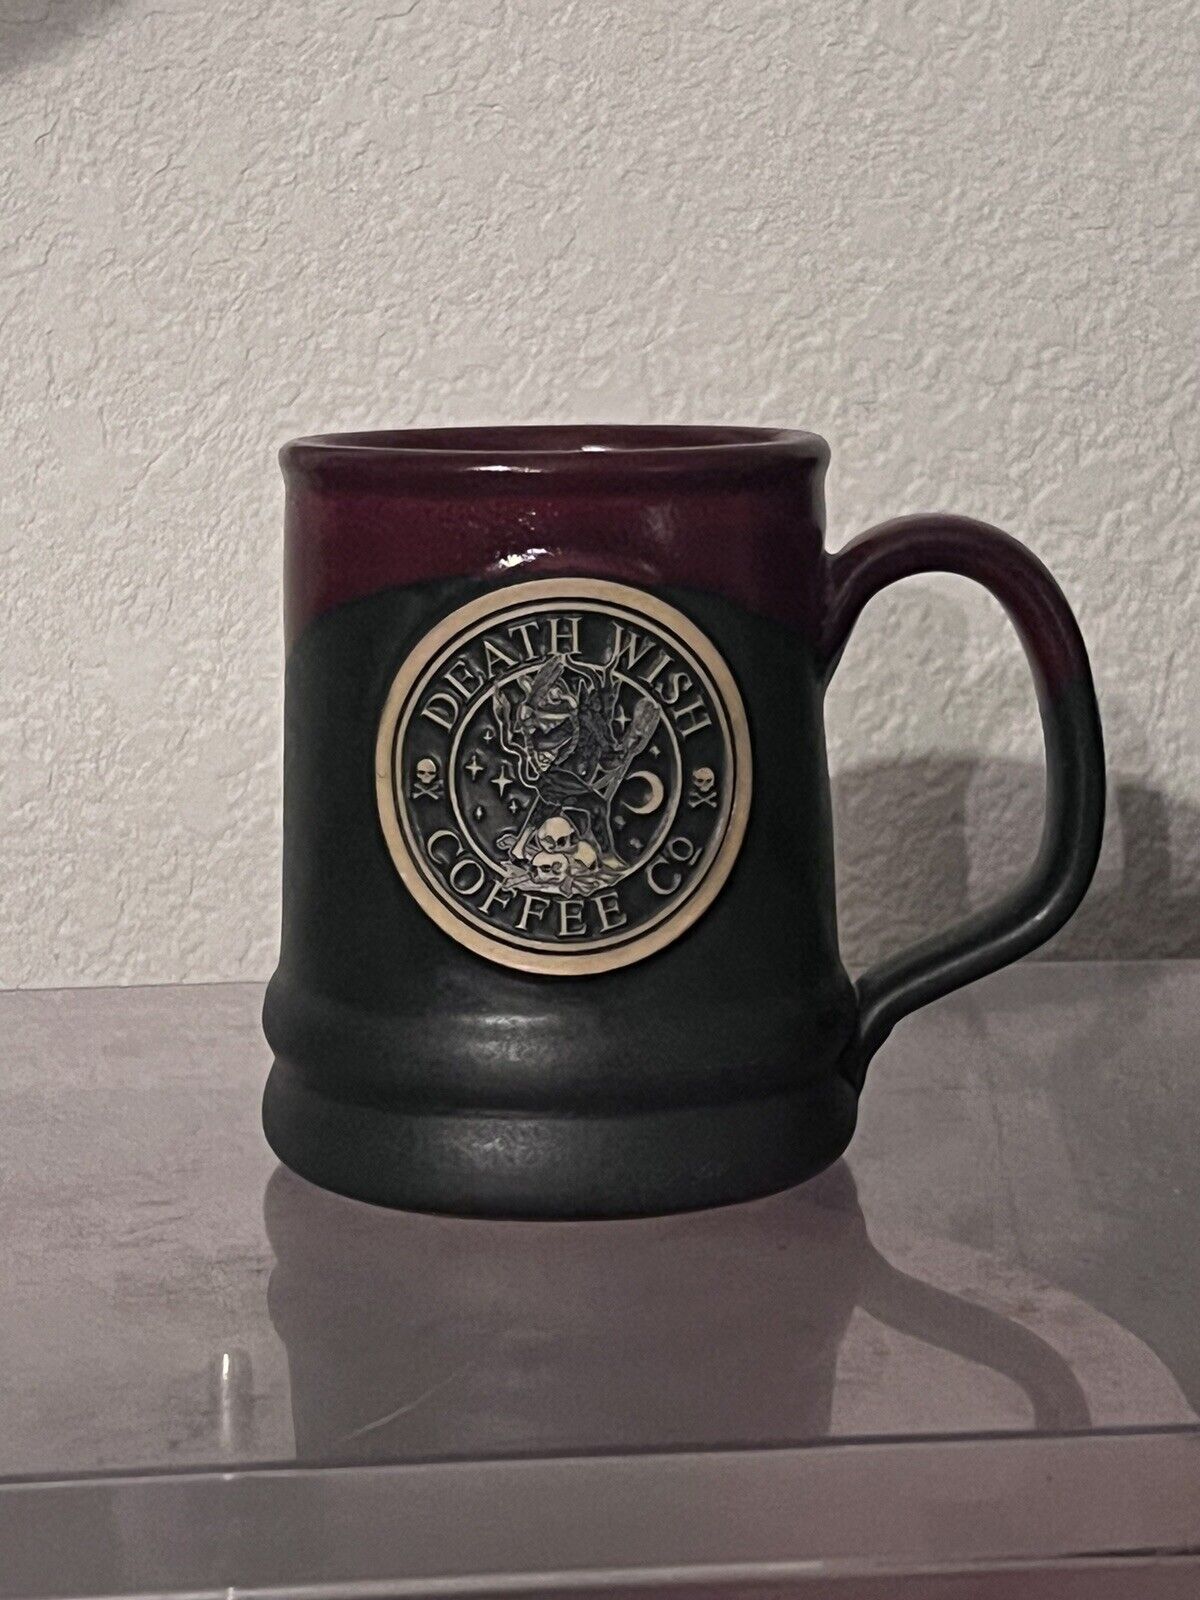 Death Wish Coffee 2019  Winter Mug - KRAMPUS 2486/3666 - Deneen Pottery